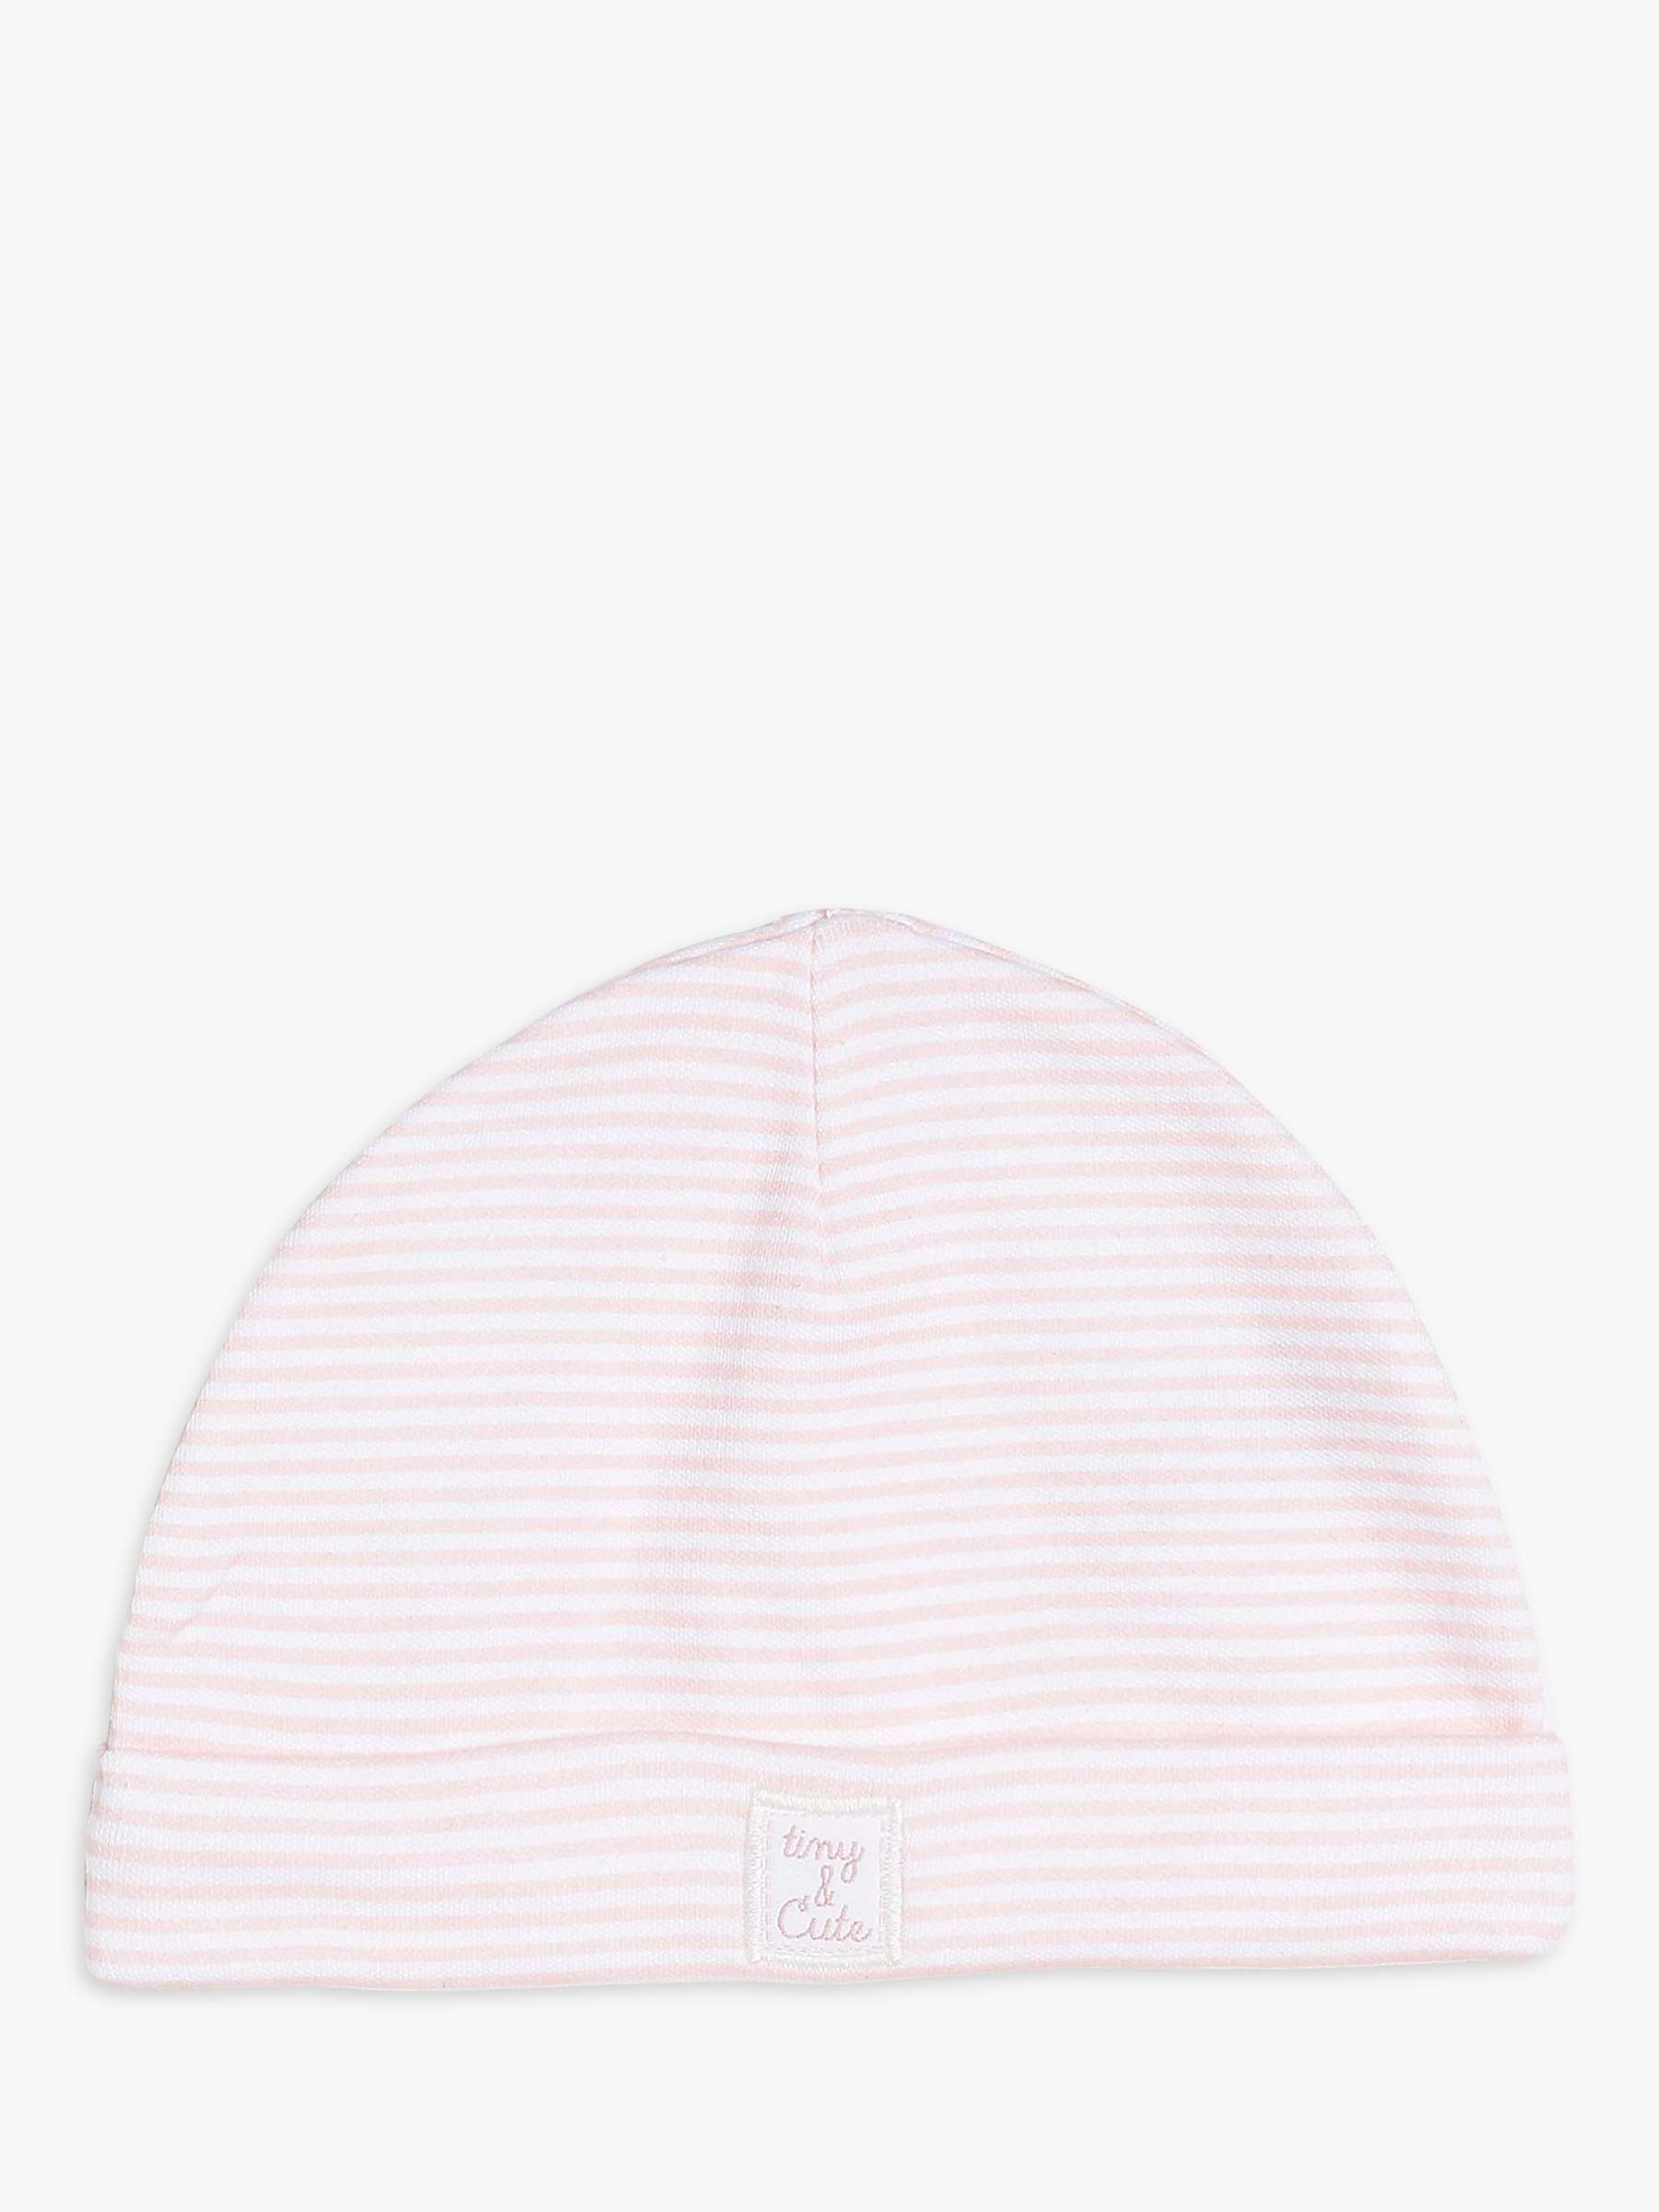 Buy Mini Cuddles Baby Floral Applique Sleepsuits, Hat & Gloves Set, White/Pink Online at johnlewis.com